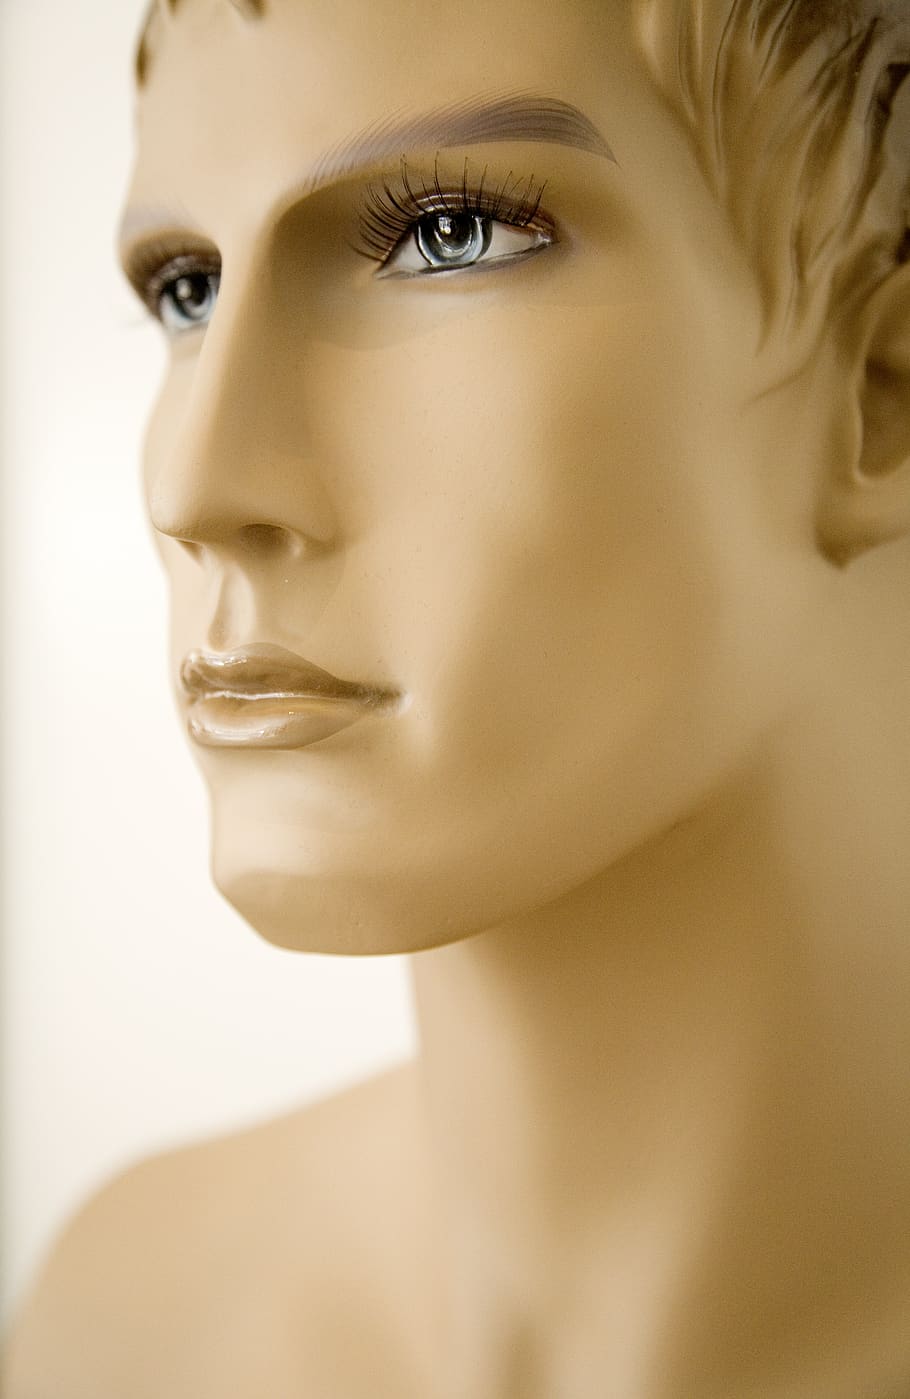 Male Manikin, mannequin, person, human body part, close-up, headshot